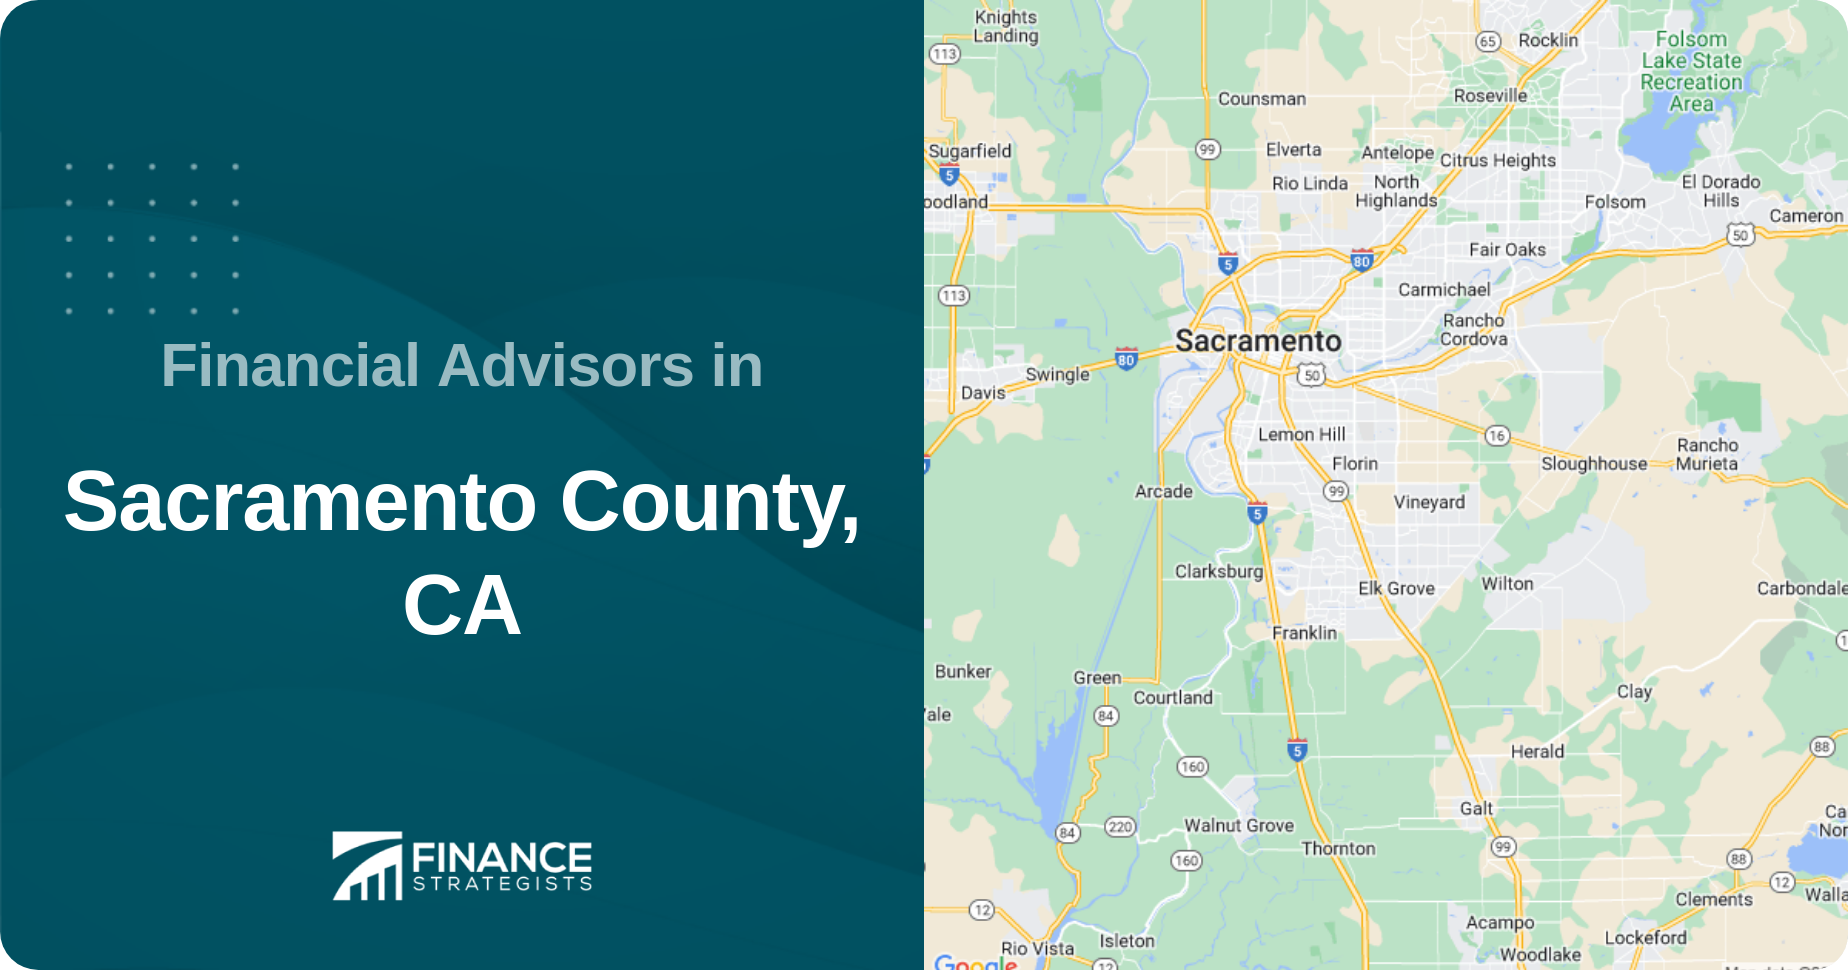 Financial Advisors in Sacramento County, CA